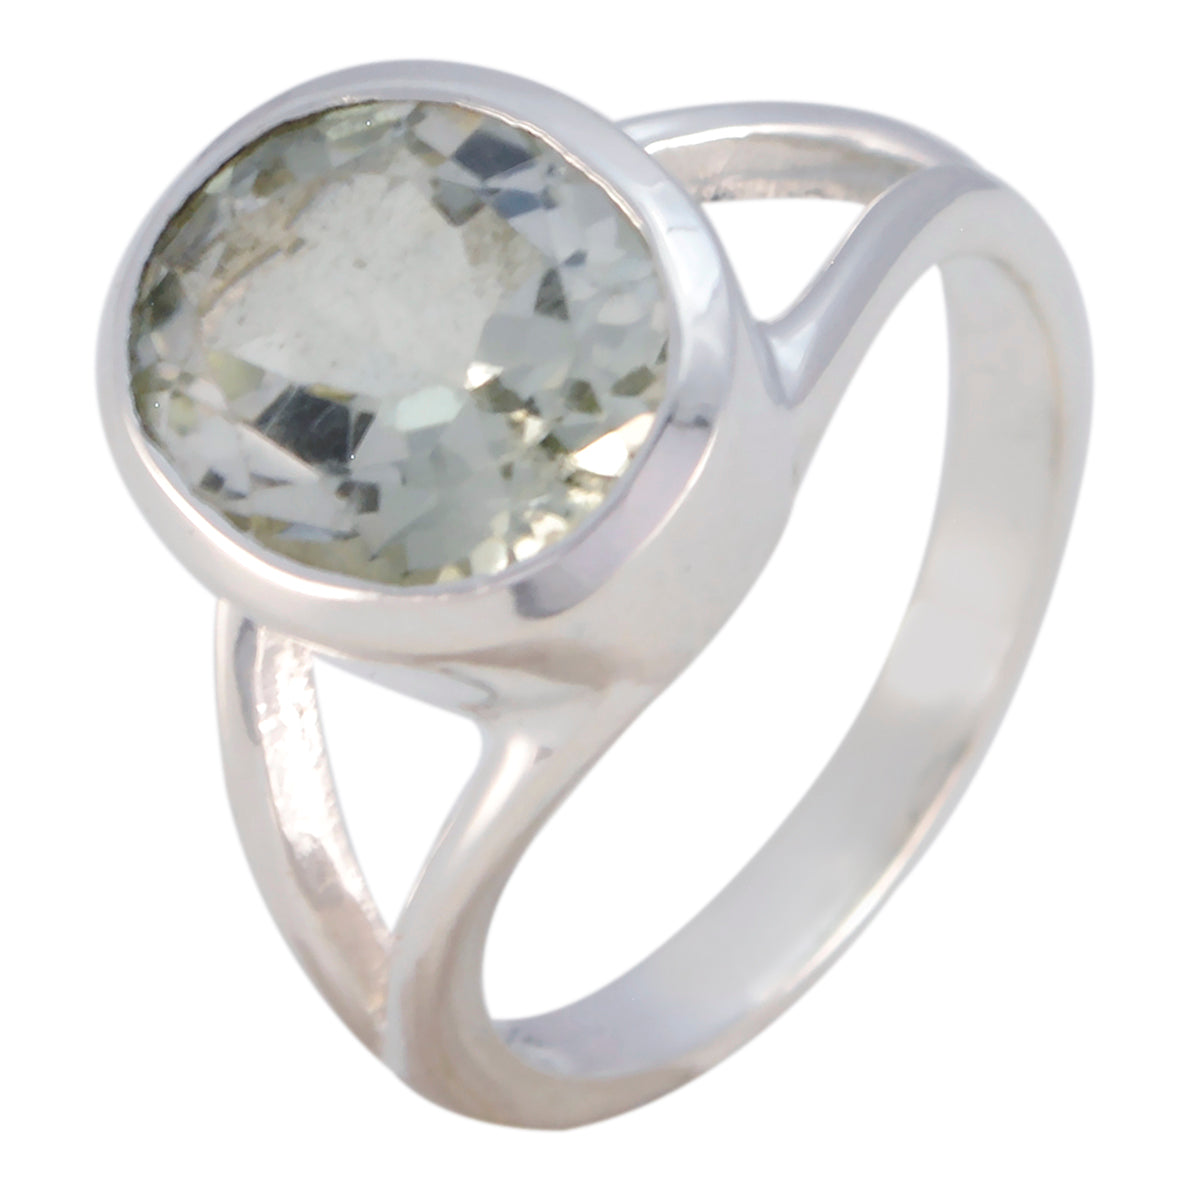 Riyo Radiant Stone Green Amethyst Sterling Silver Ring Greek Jewelry